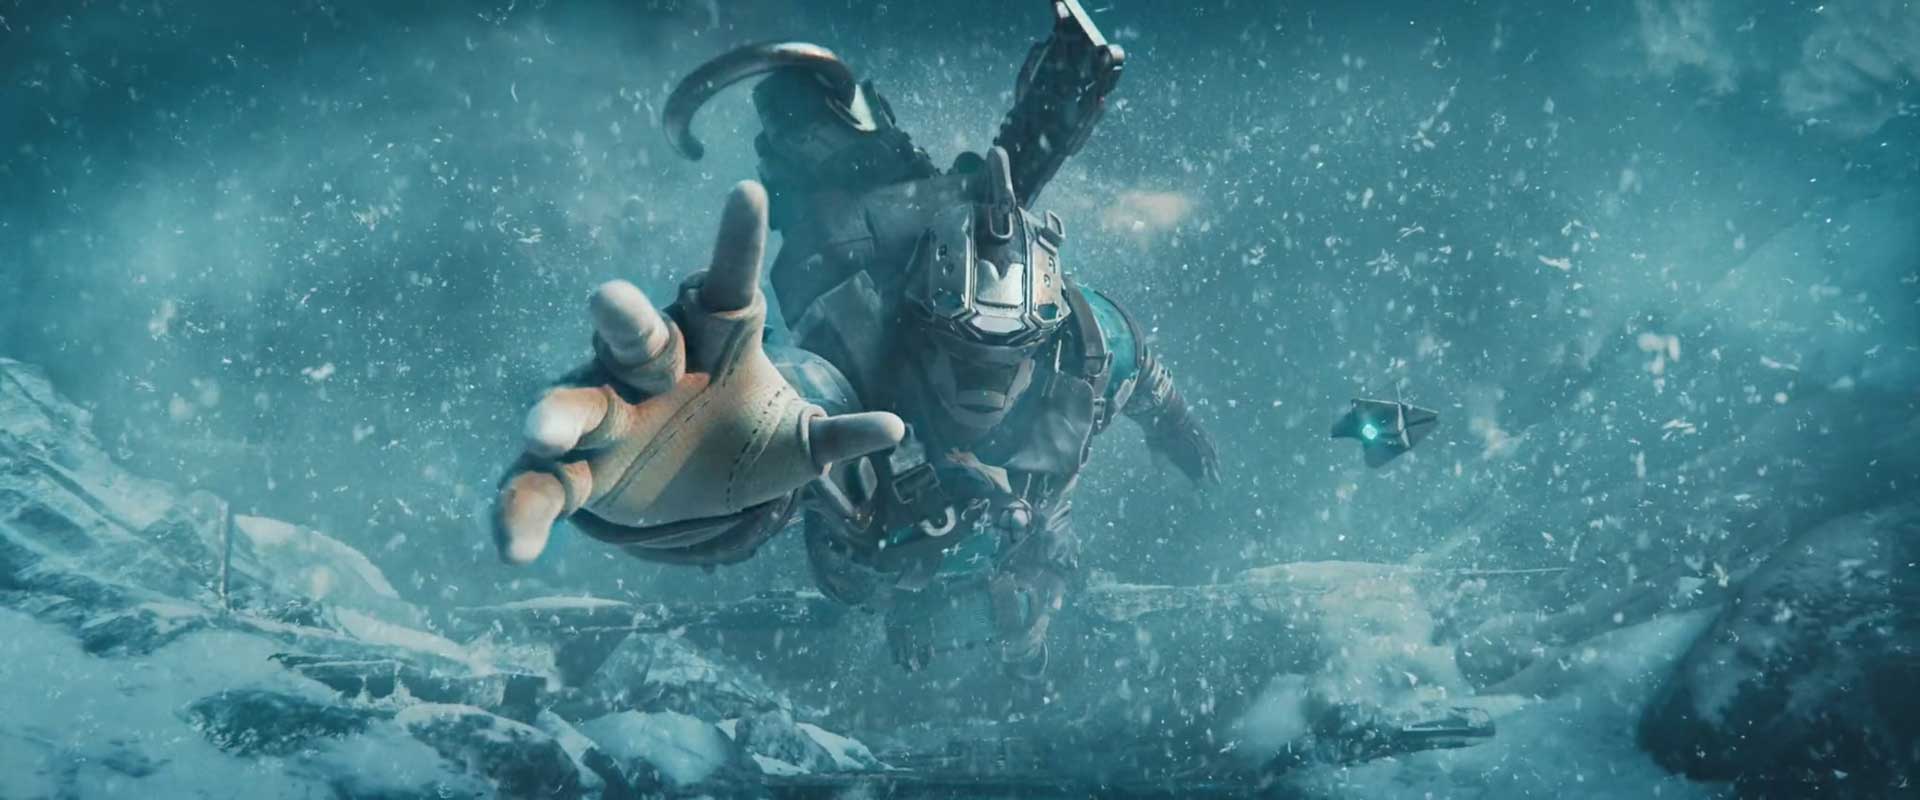 Destiny 2 The Final Shape Reveal Trailer Ilya Abulkhanov The Mill | STASH MAGAZINE